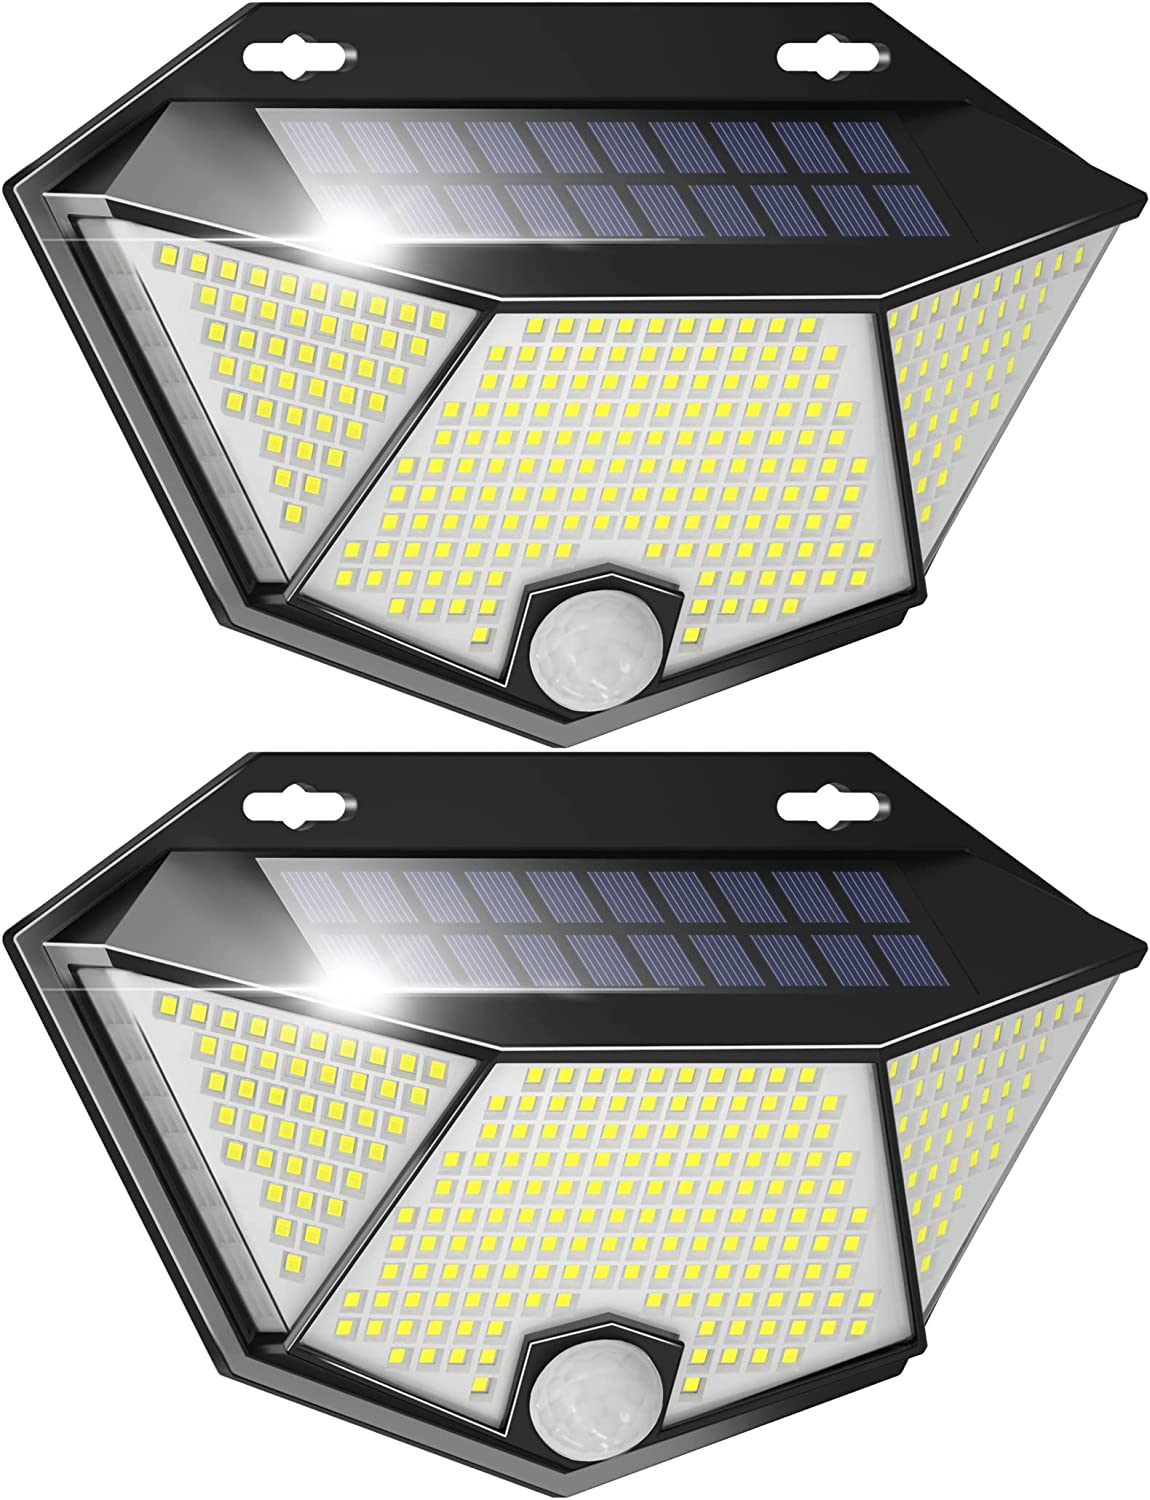 Otdair 308 LED Solar Lights Outdoor, Solar Motion Lights with 3 Lighting Modes, IP65 Waterproof Solar Security Light, Solar Wall Light $11.99